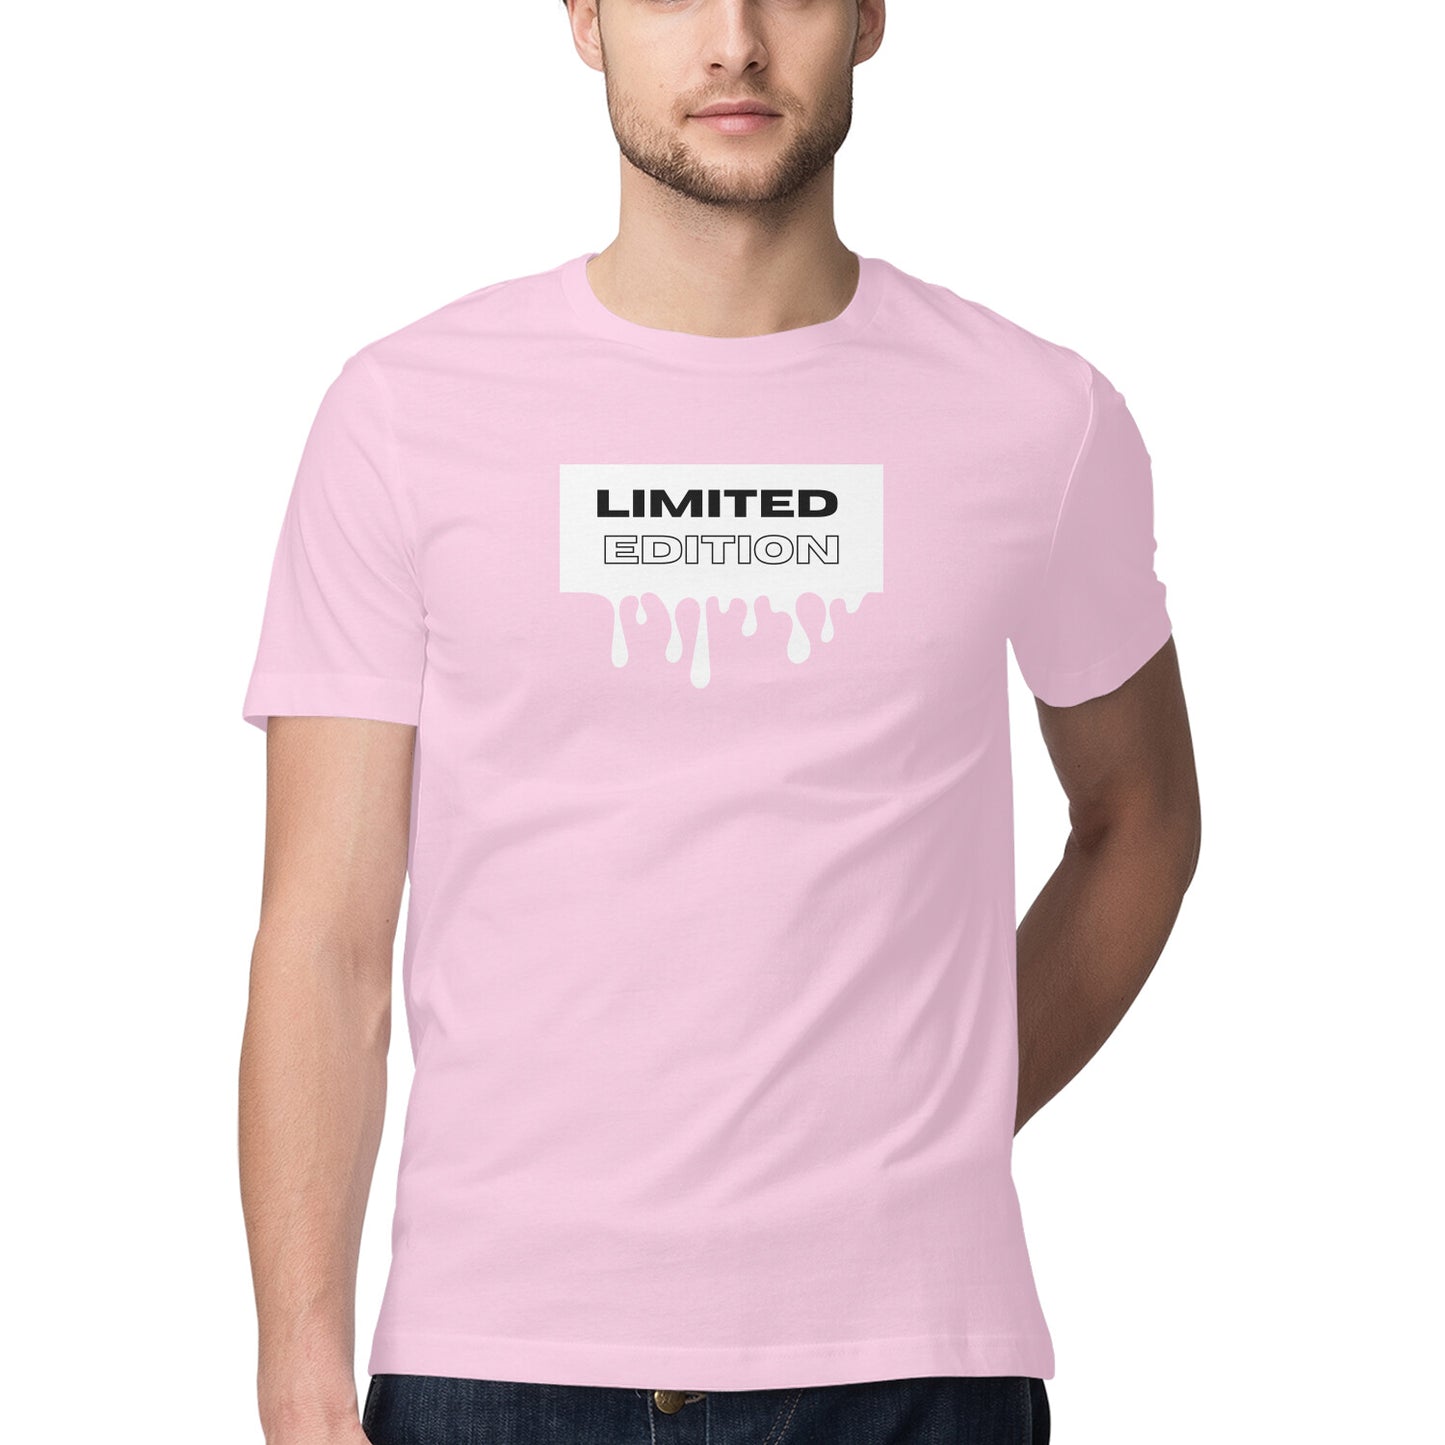 Limited Edition - Unisex Tshirt